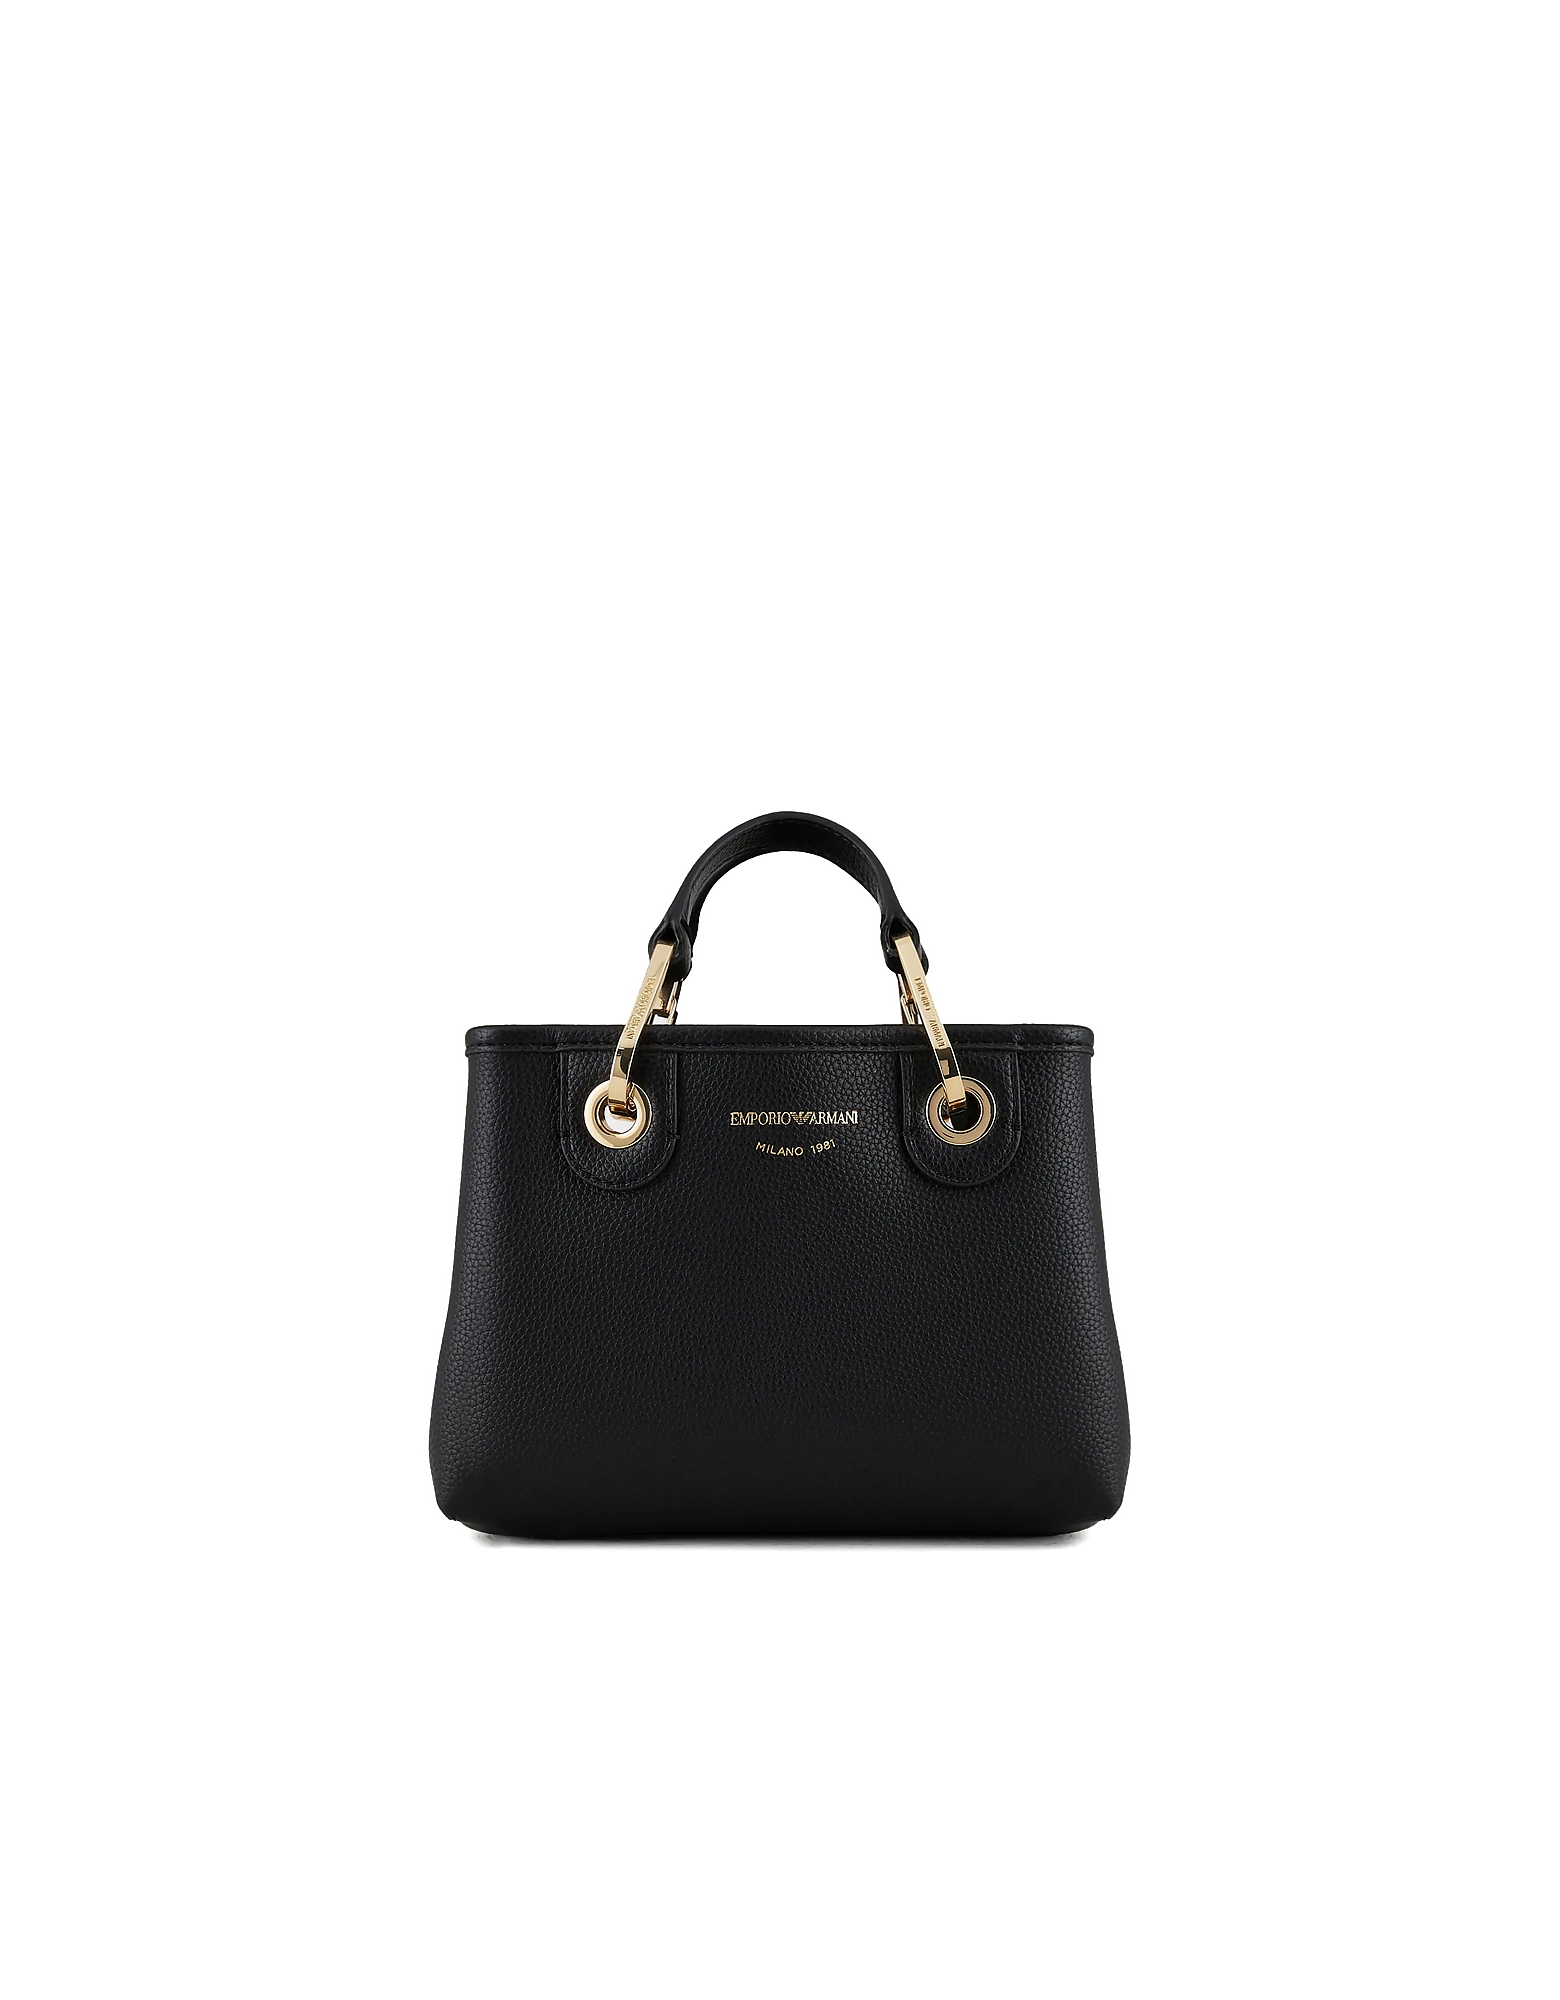 Emporio Armani Designer Handbags Women's Bag